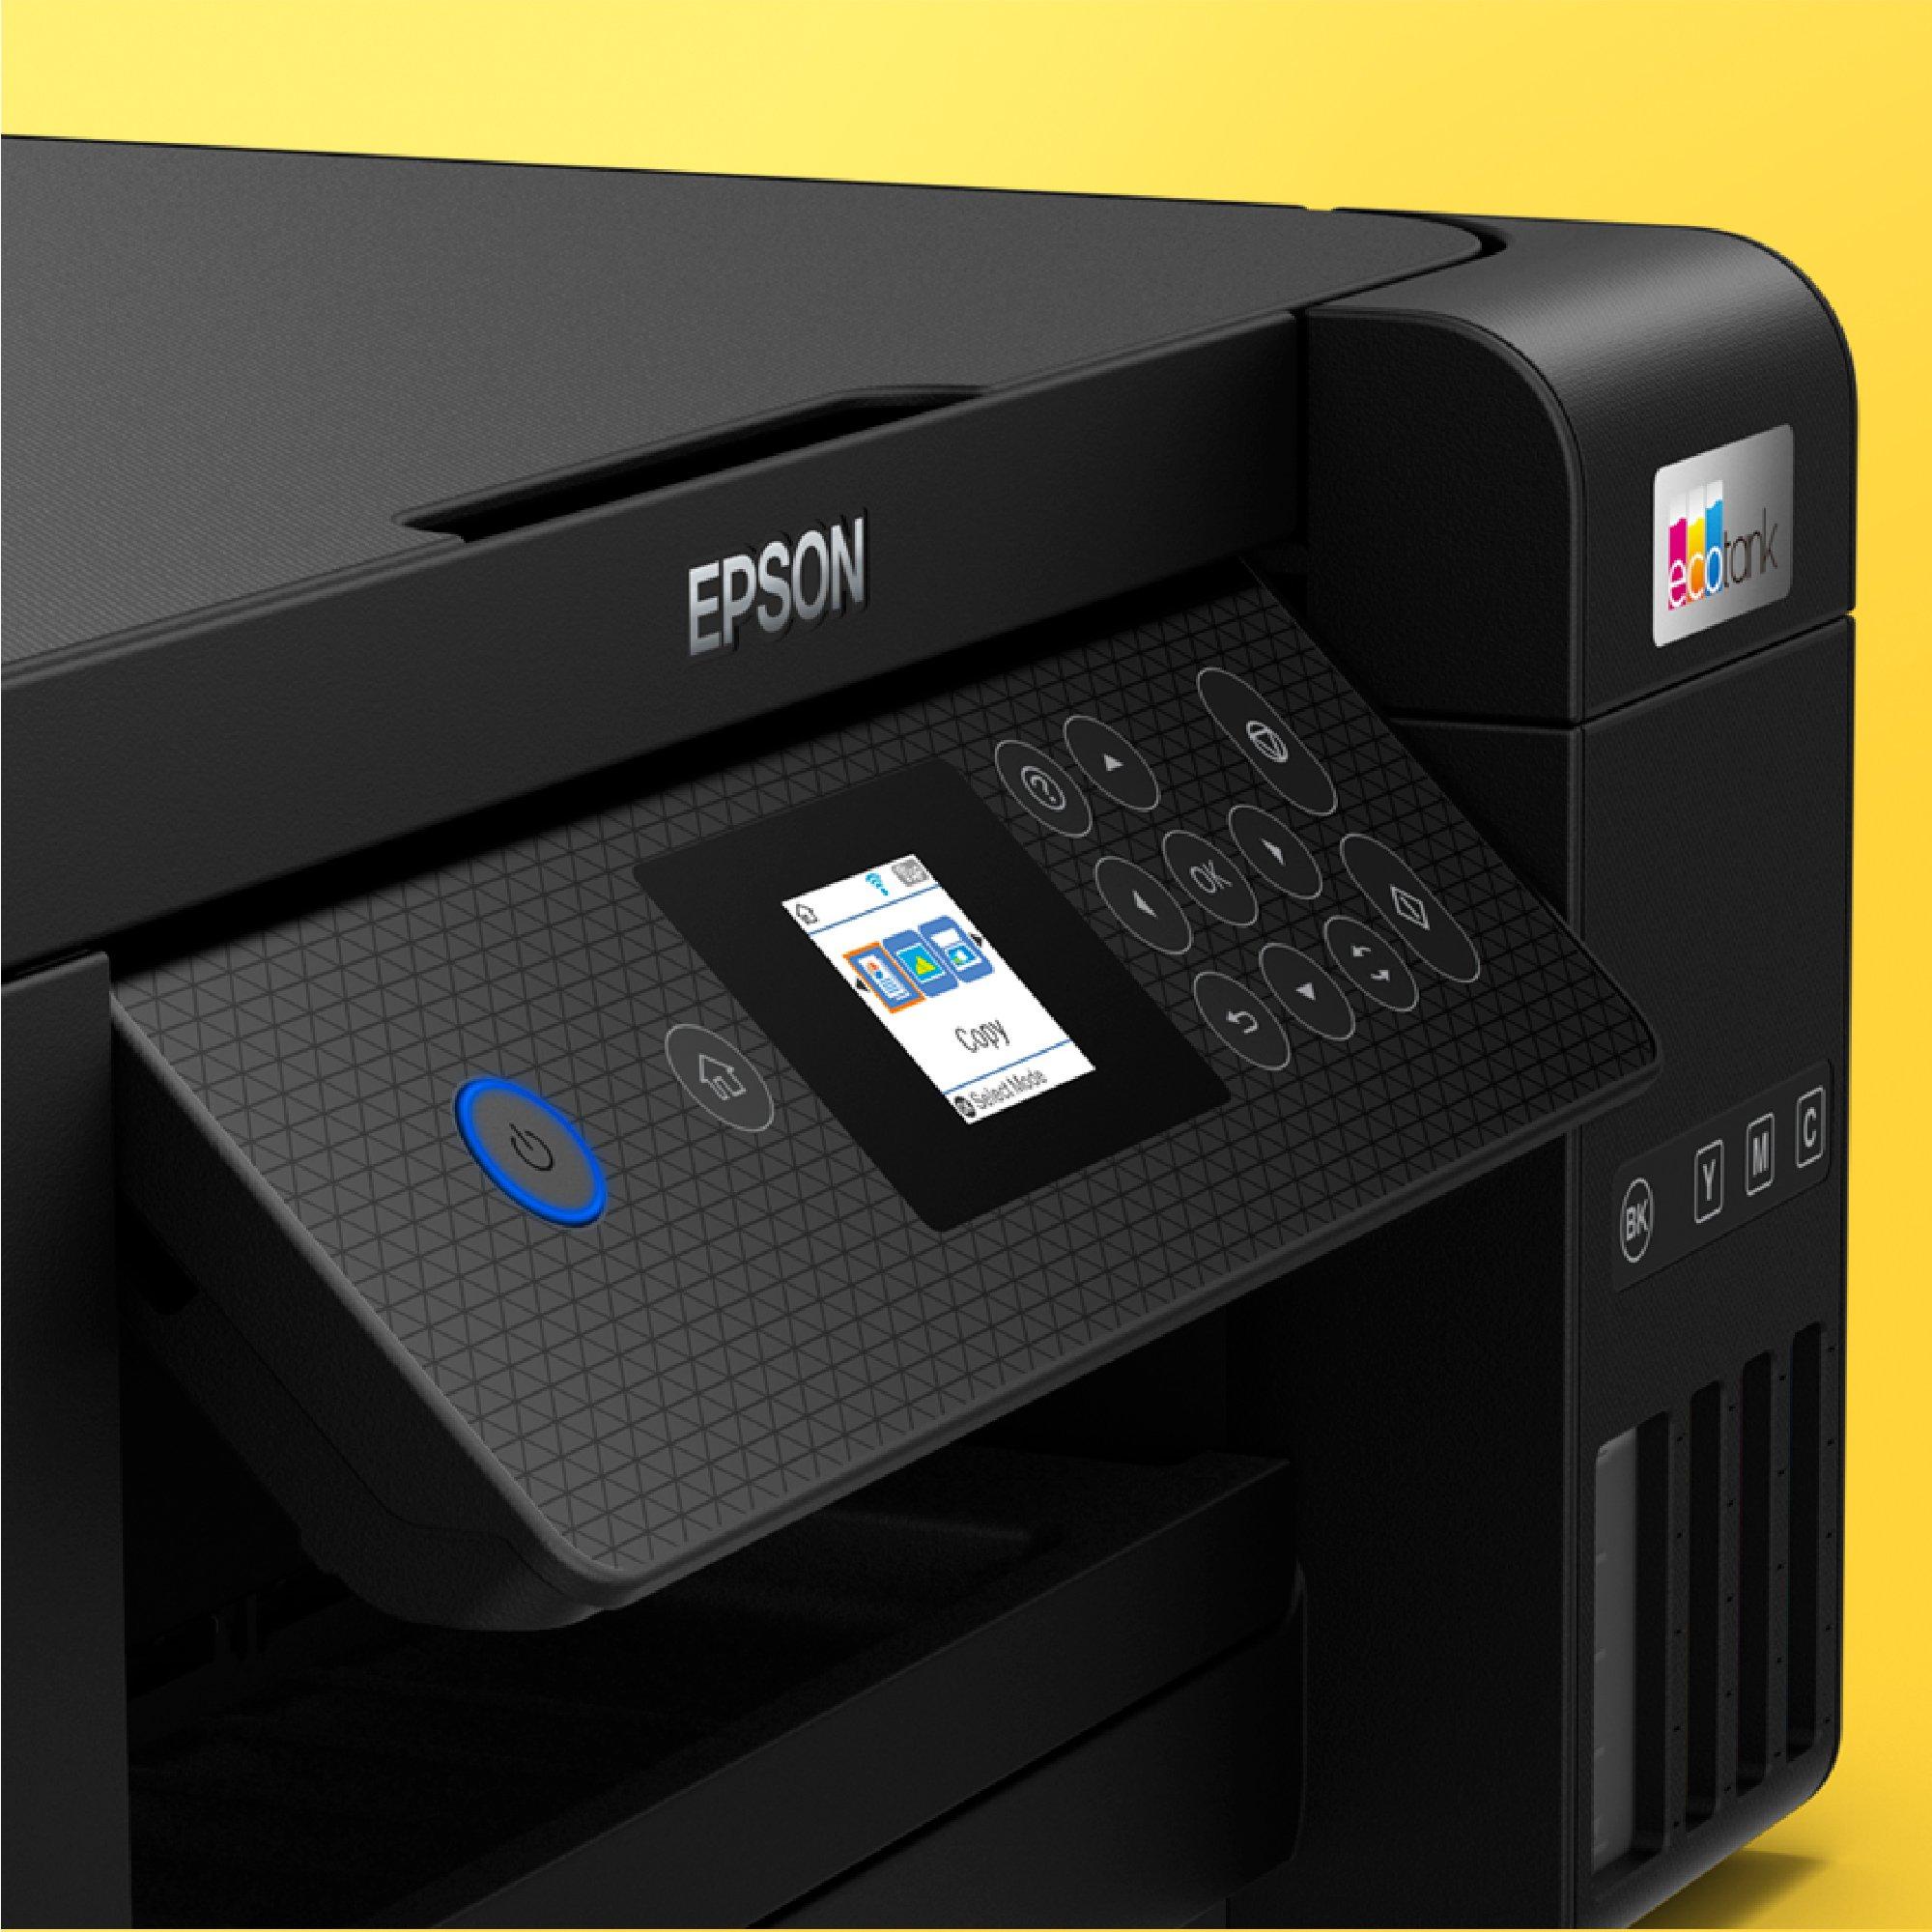 Epson ET-2850 Imprimante multifonction A4 imprimante, scanner